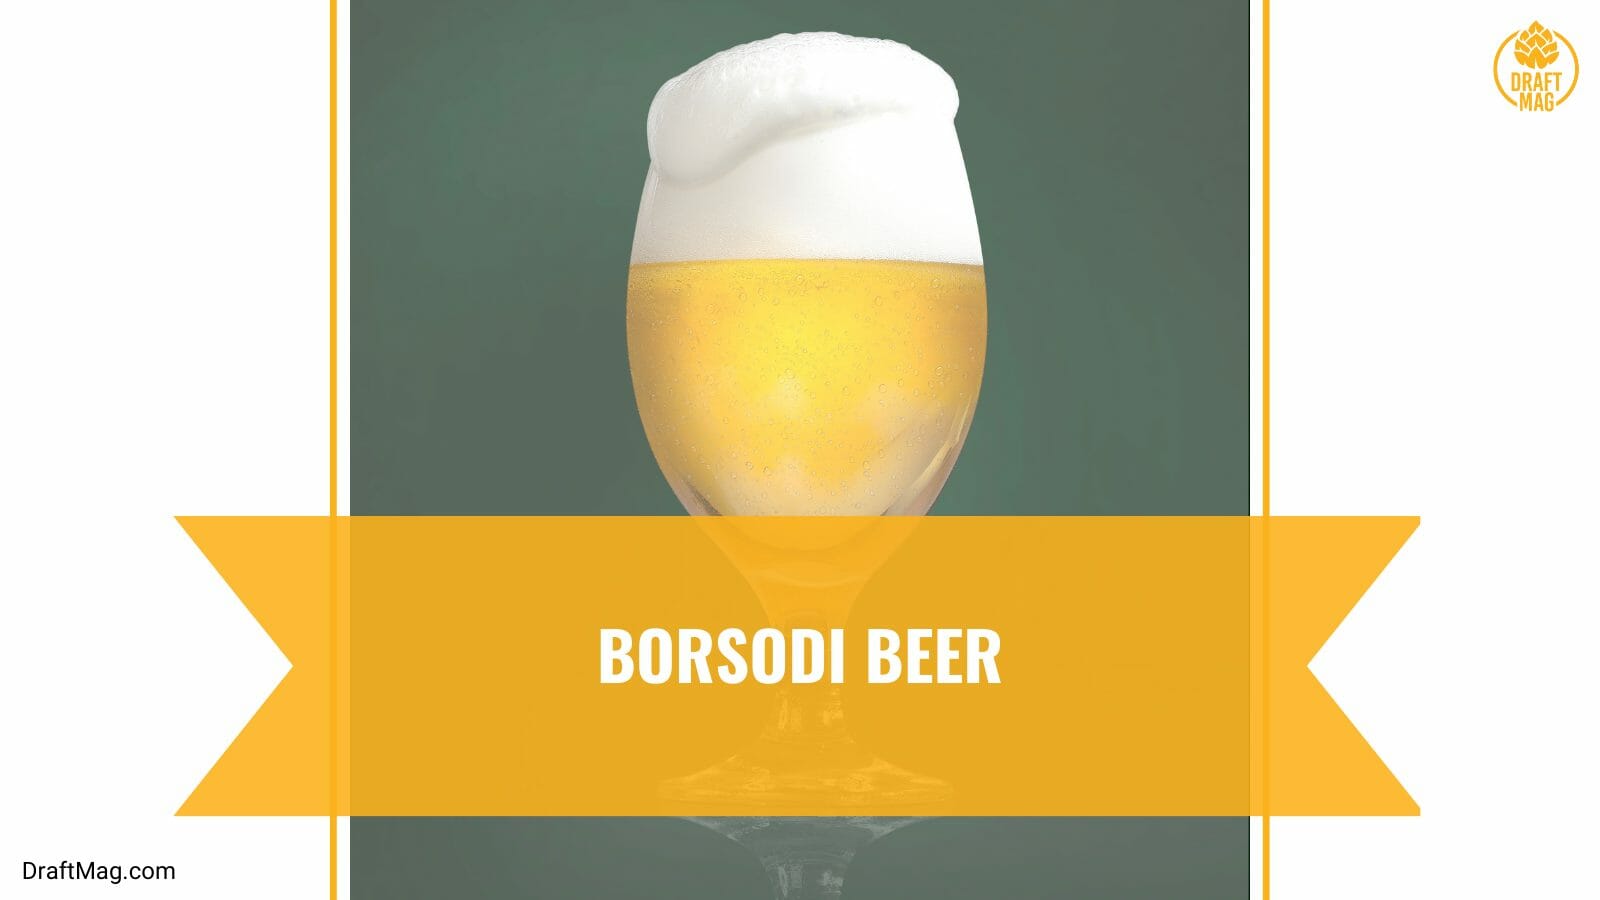 Borsodi beer american adjunct lager